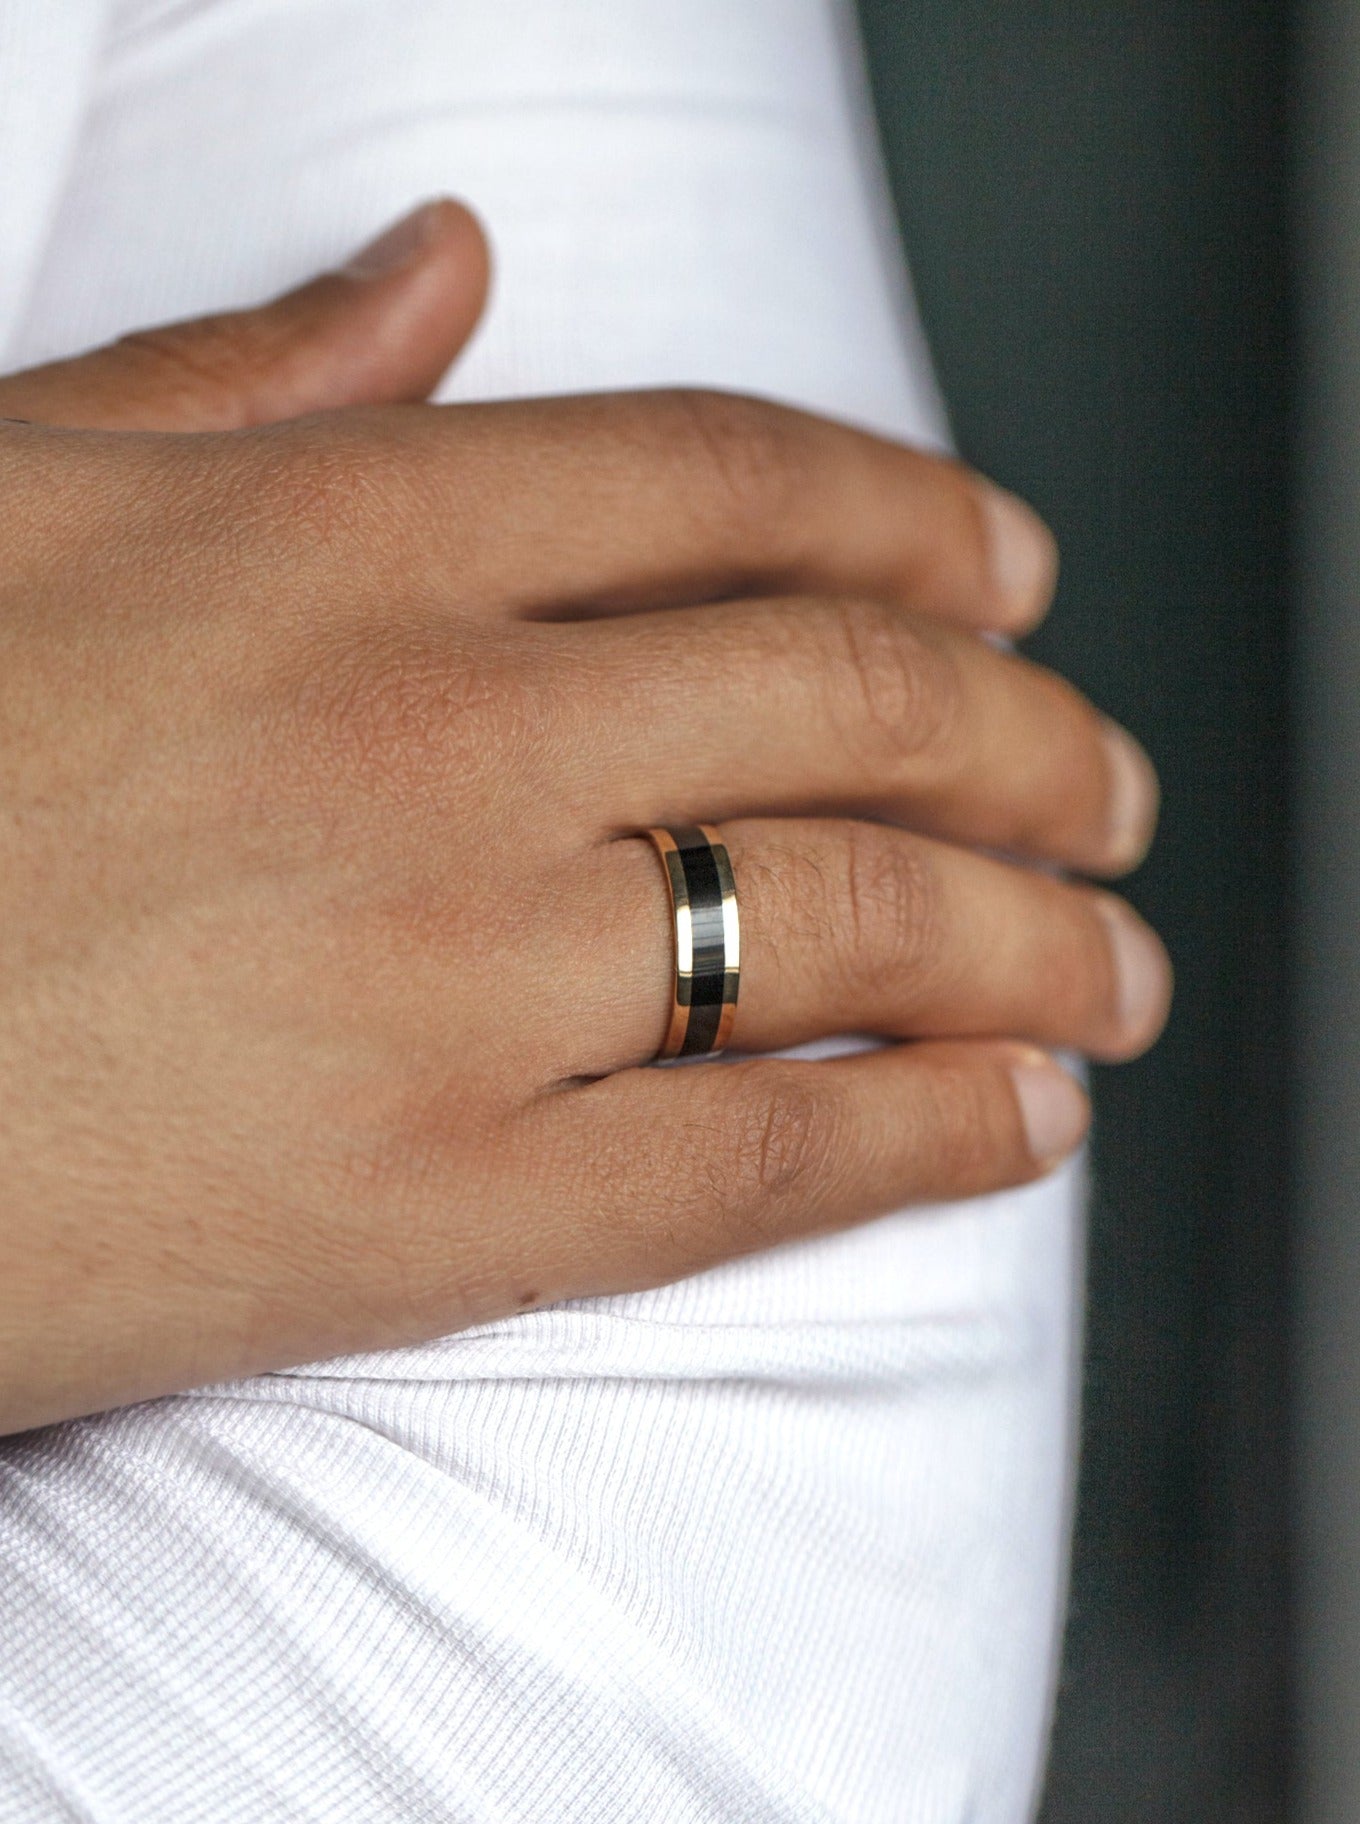 Men's god wedding ring with black enamel, black and gold wedding band, unique wedding ring, black men's band, ring for him, wedding ring for men